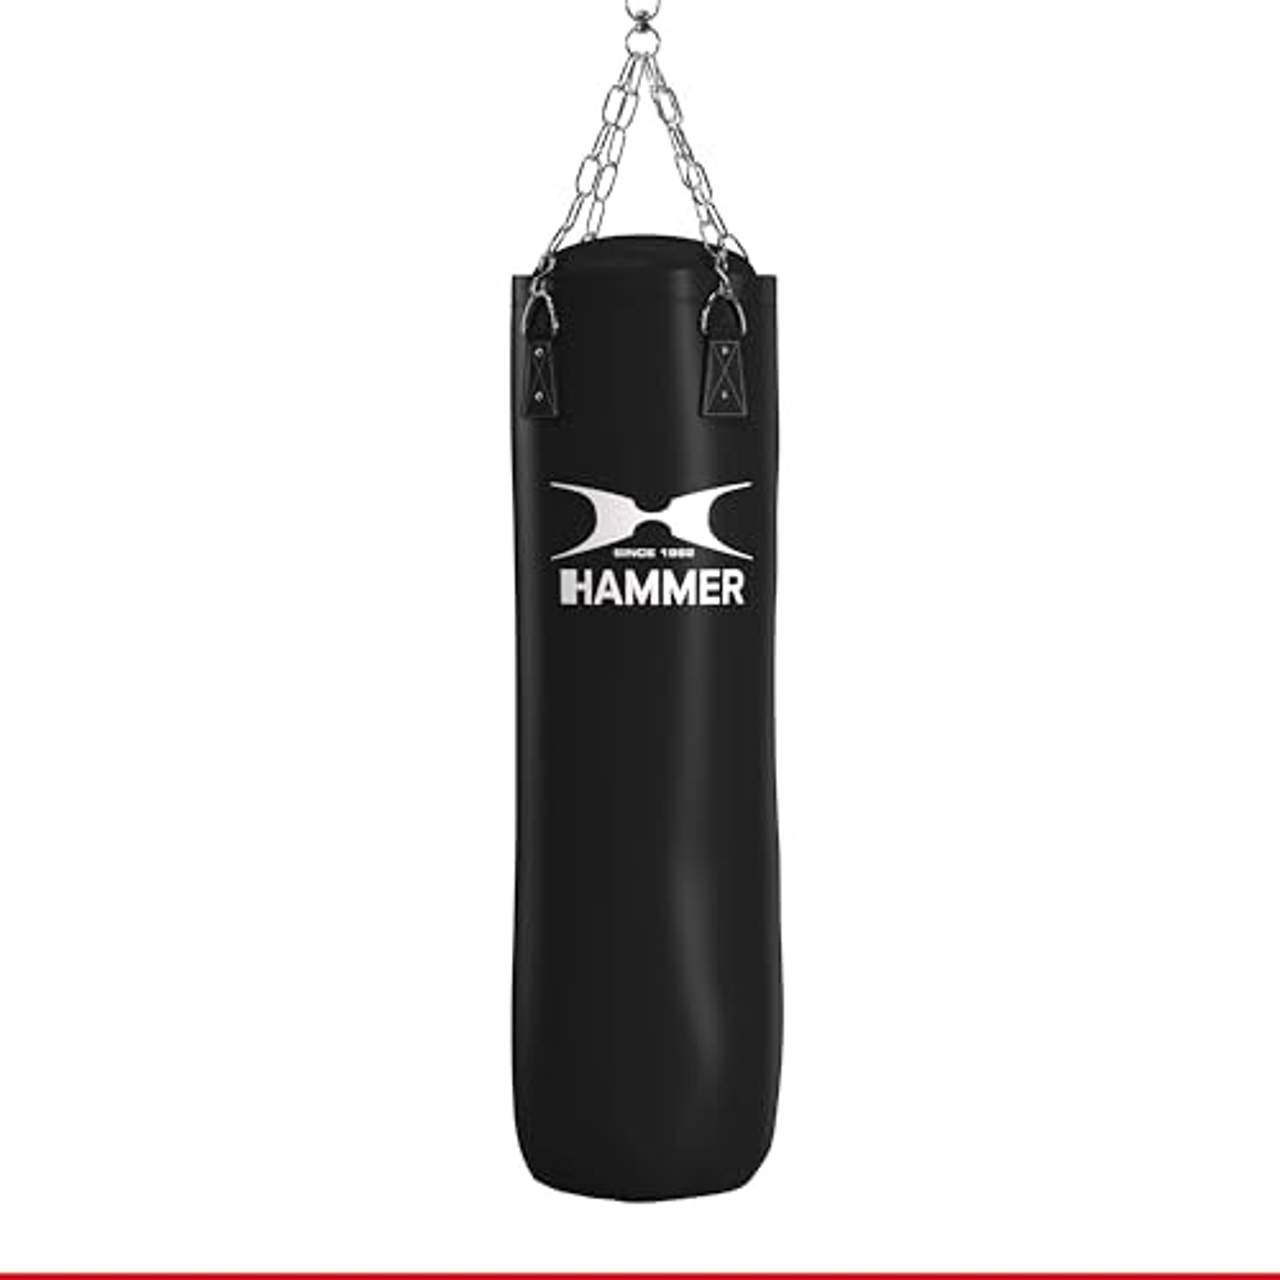 HAMMER Boxing Boxsack Premium Black Kick